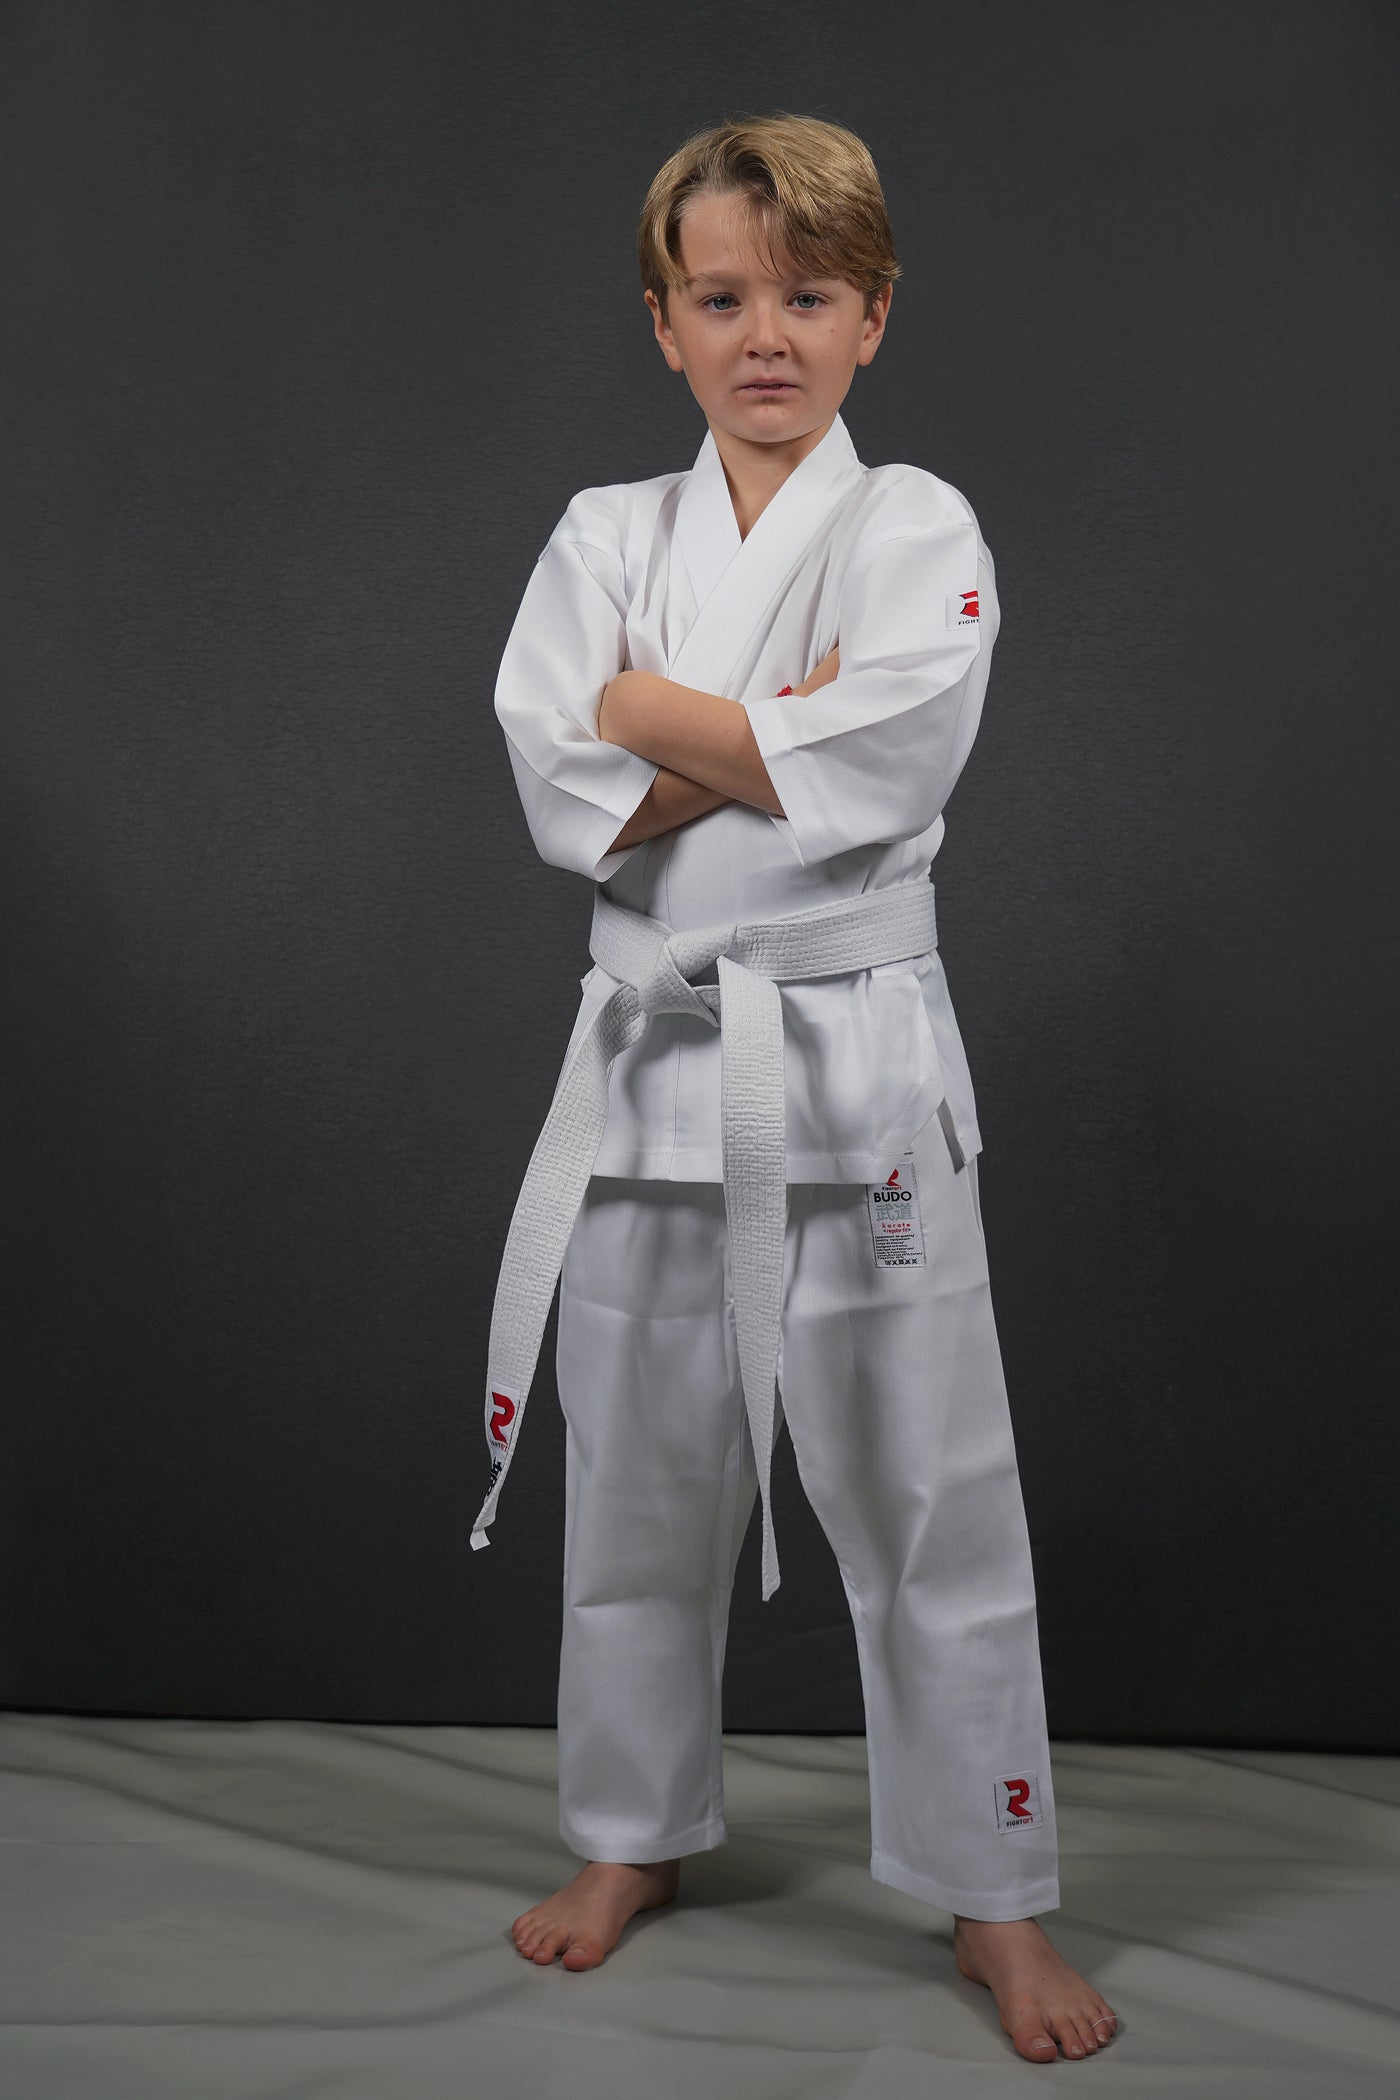 Karate Training Kimono - Budo Model (Child)